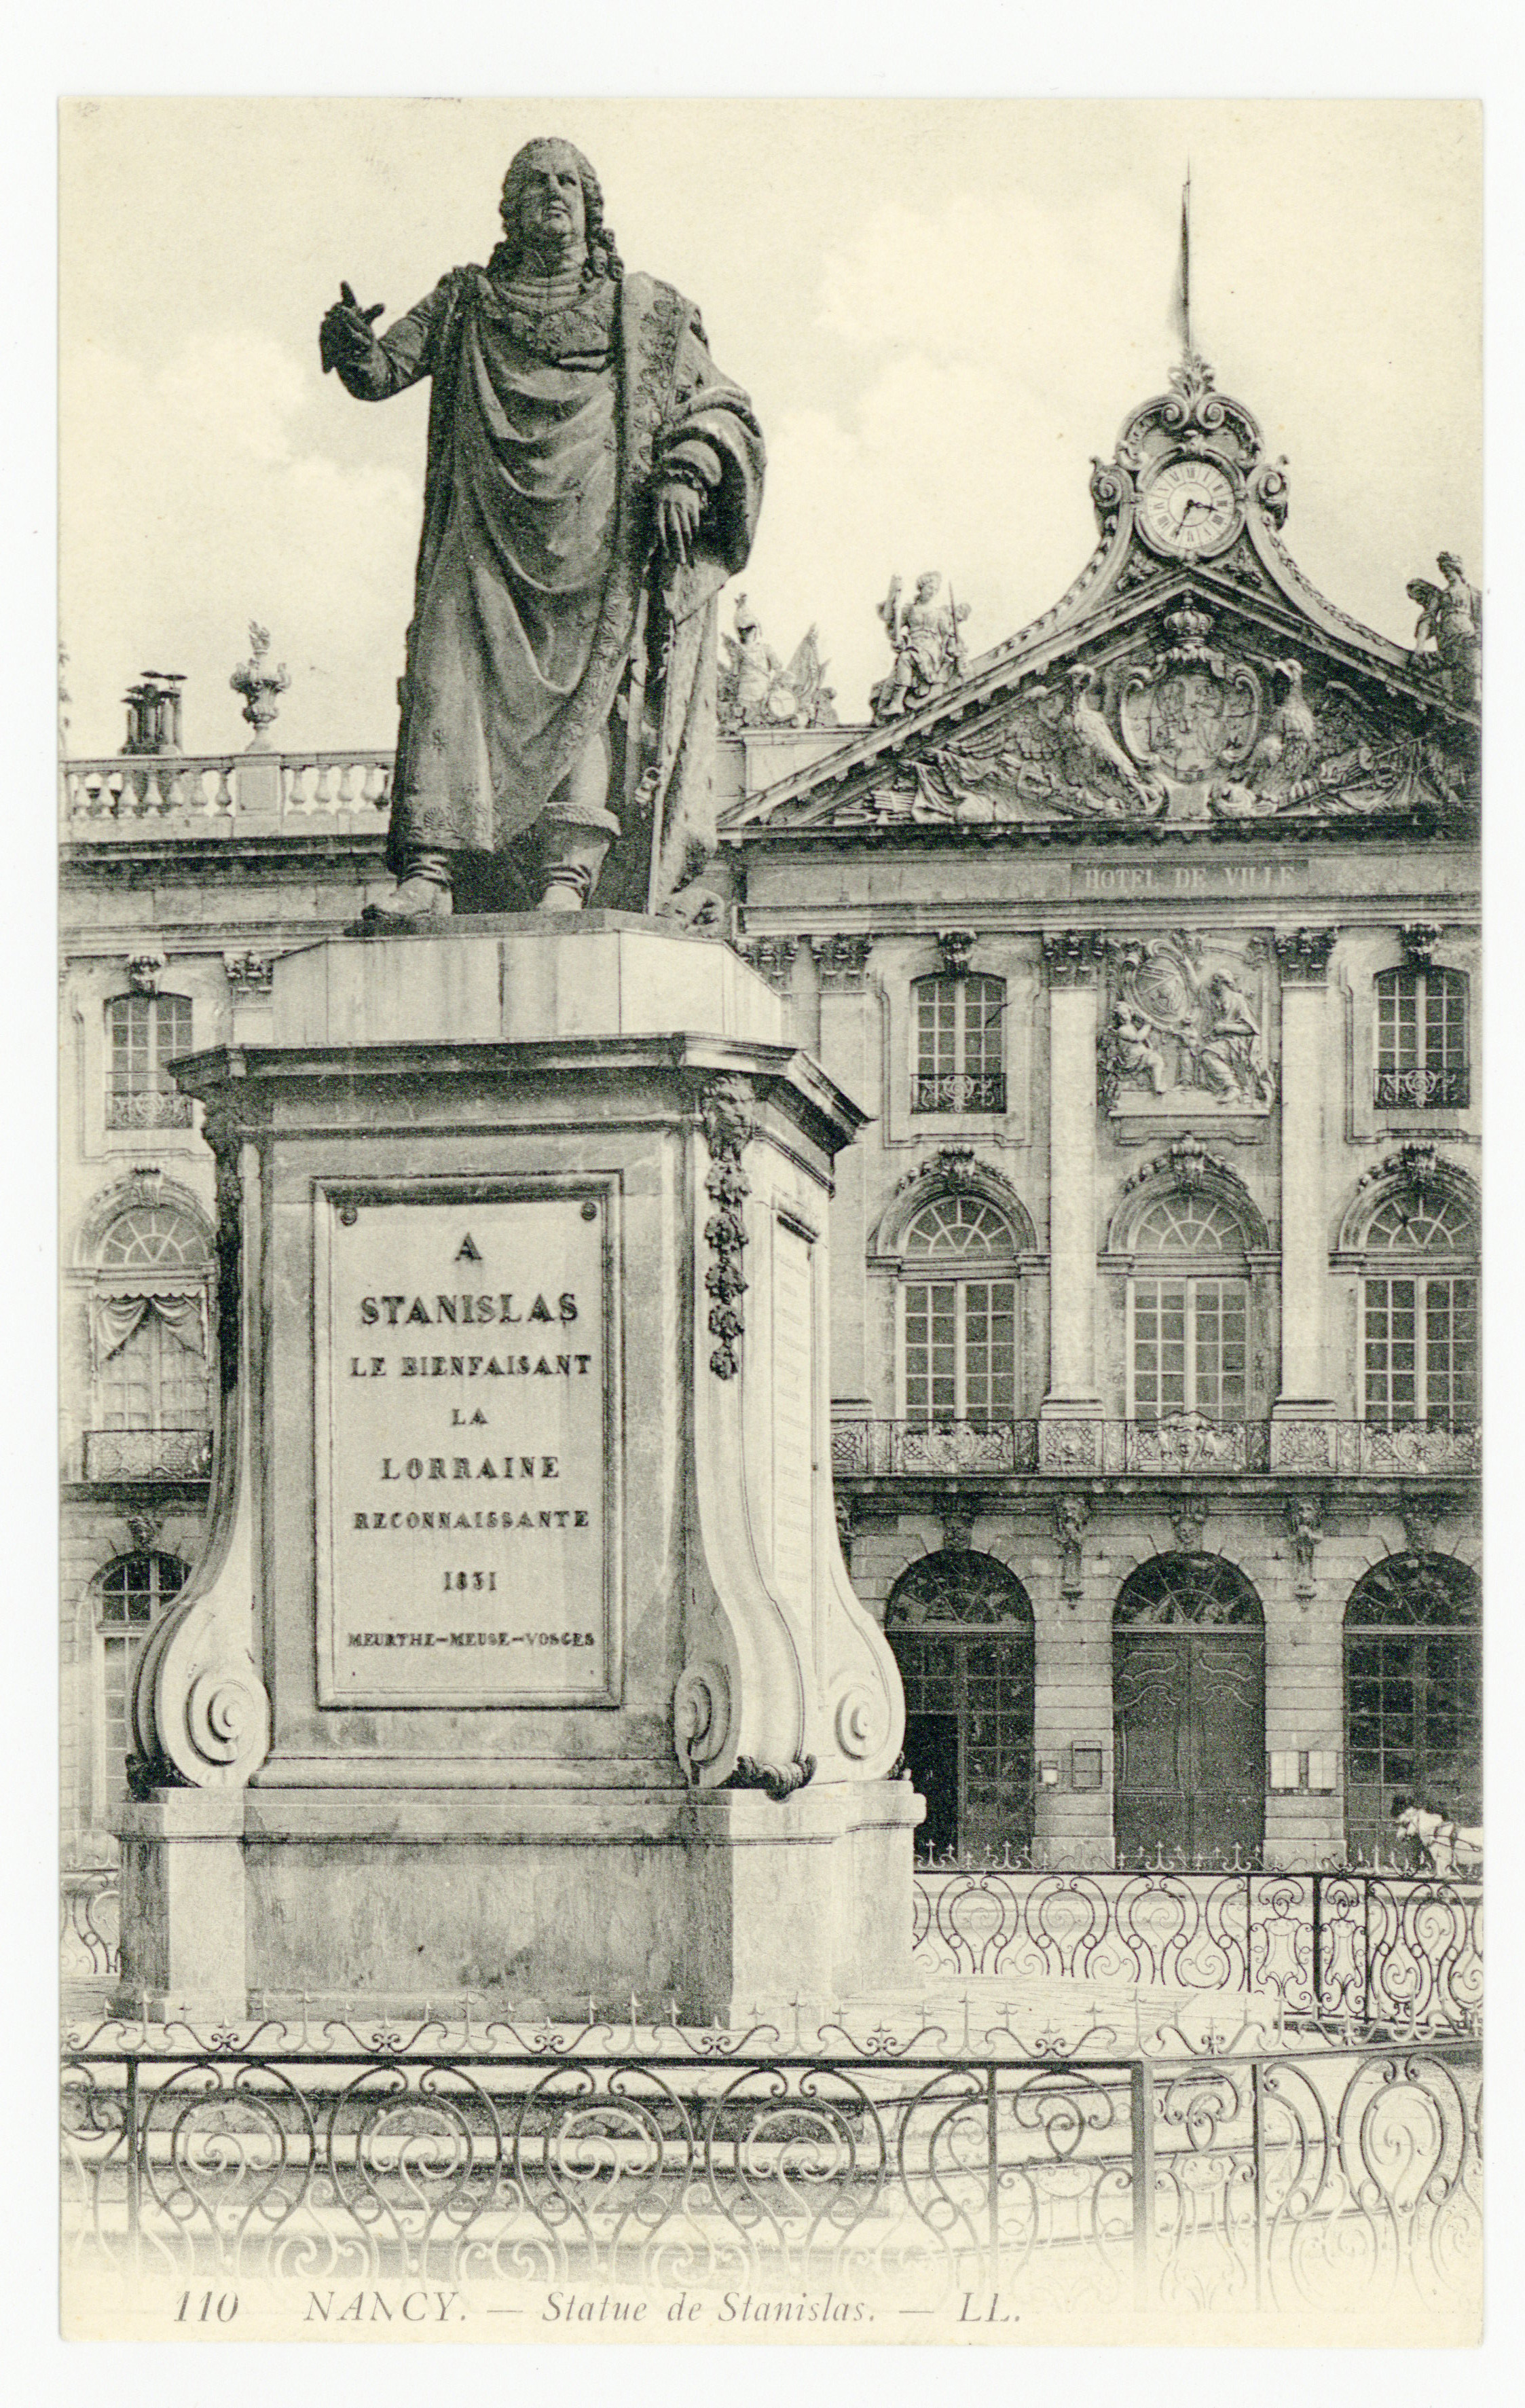 Contenu du Nancy : statue de Stanislas